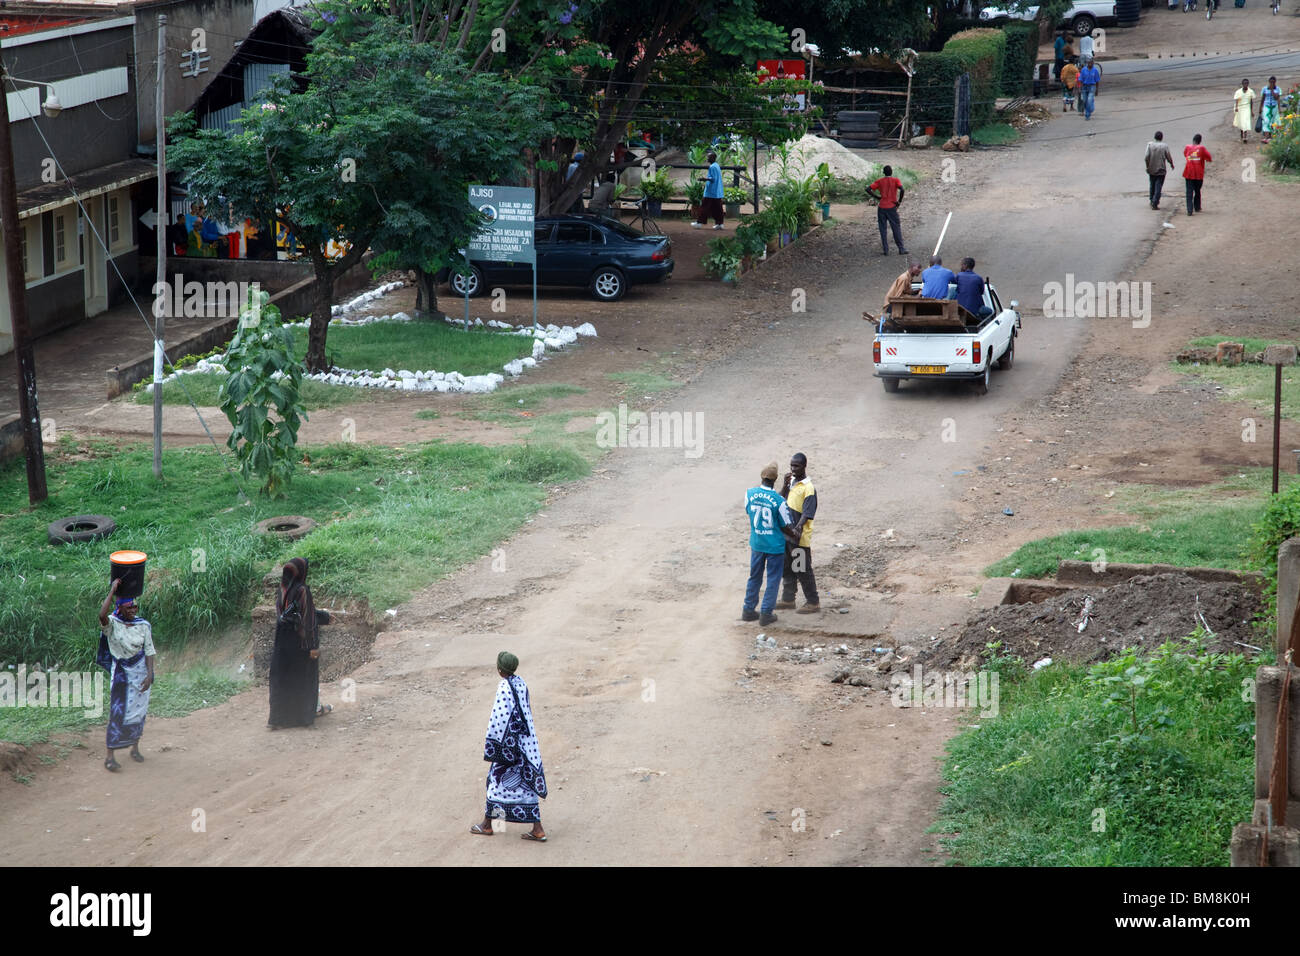 Escena callejera en Moshi, Tanzania Foto de stock